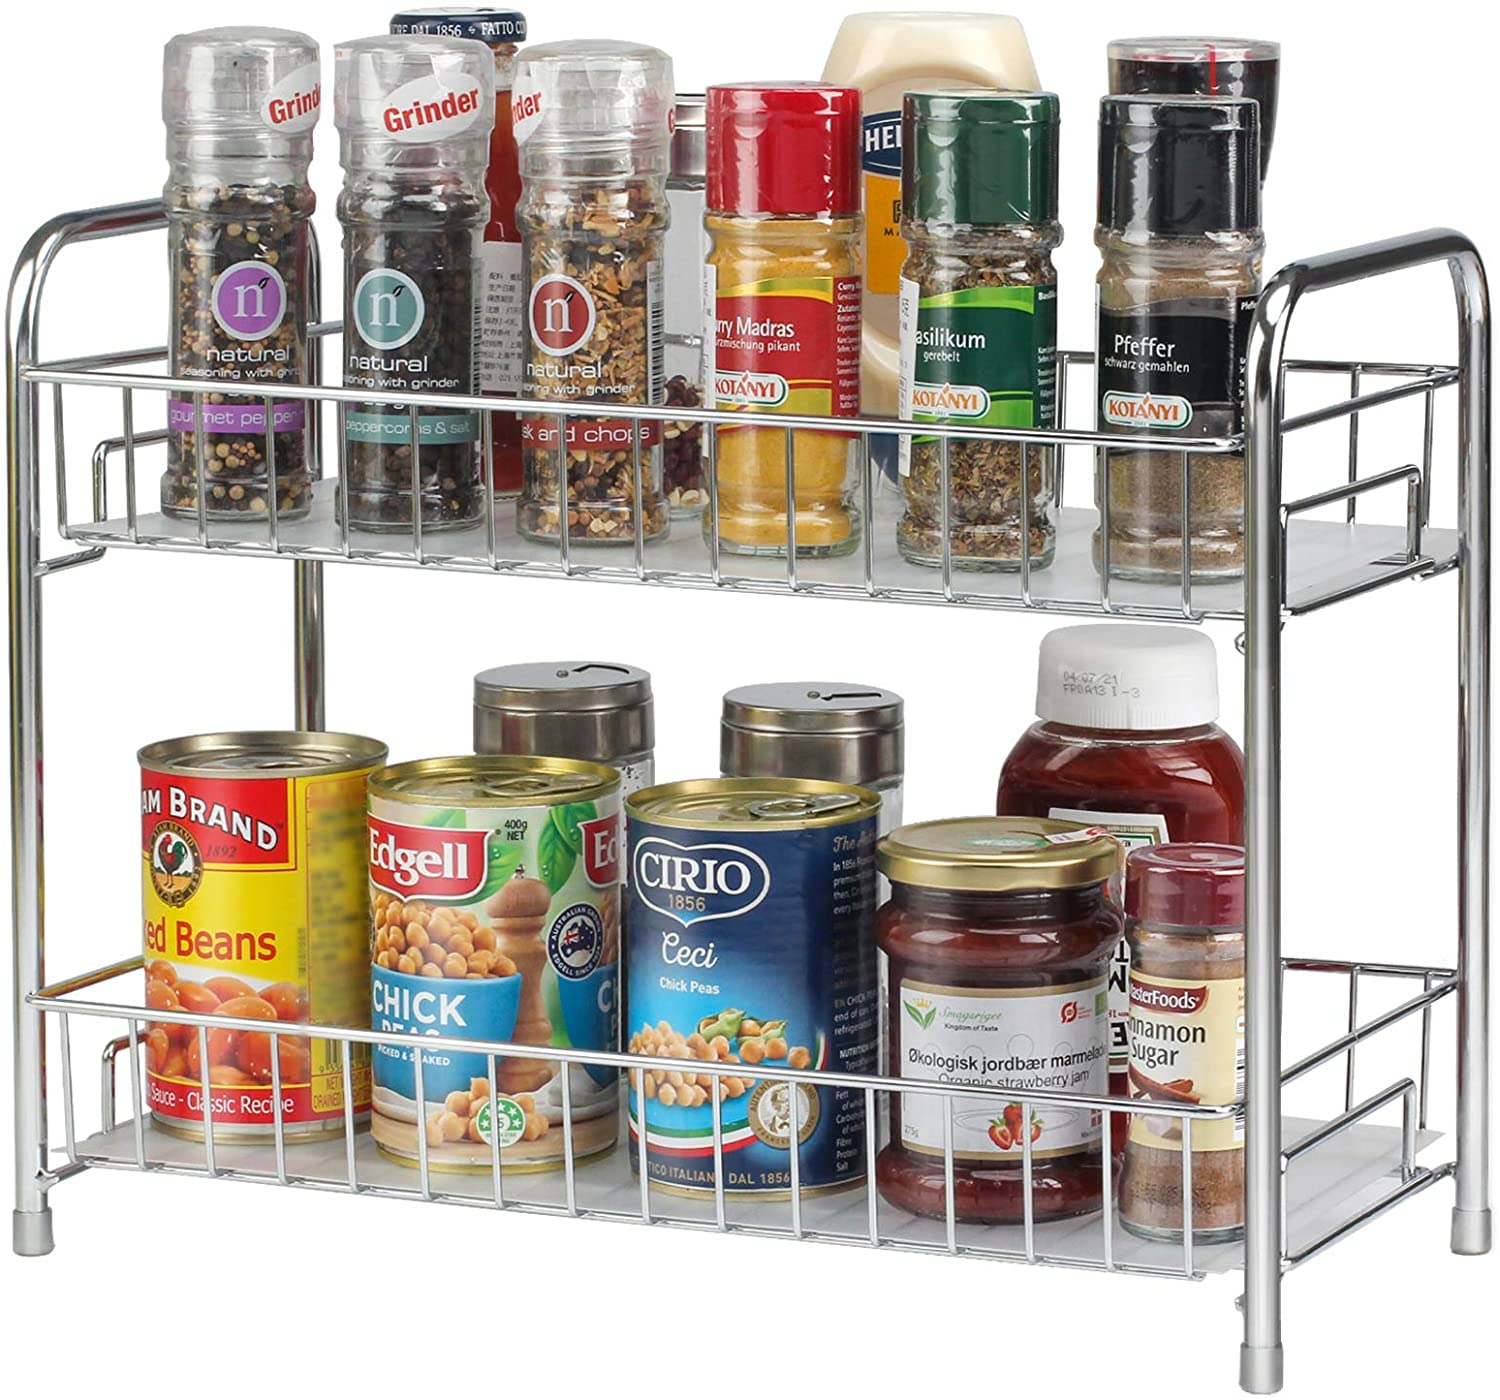 TreeLen Spice Rack Organizer for Countertop 2 Tier Counter Shelf Standing Holder Storage for Kitchen Cabinet-Bronze